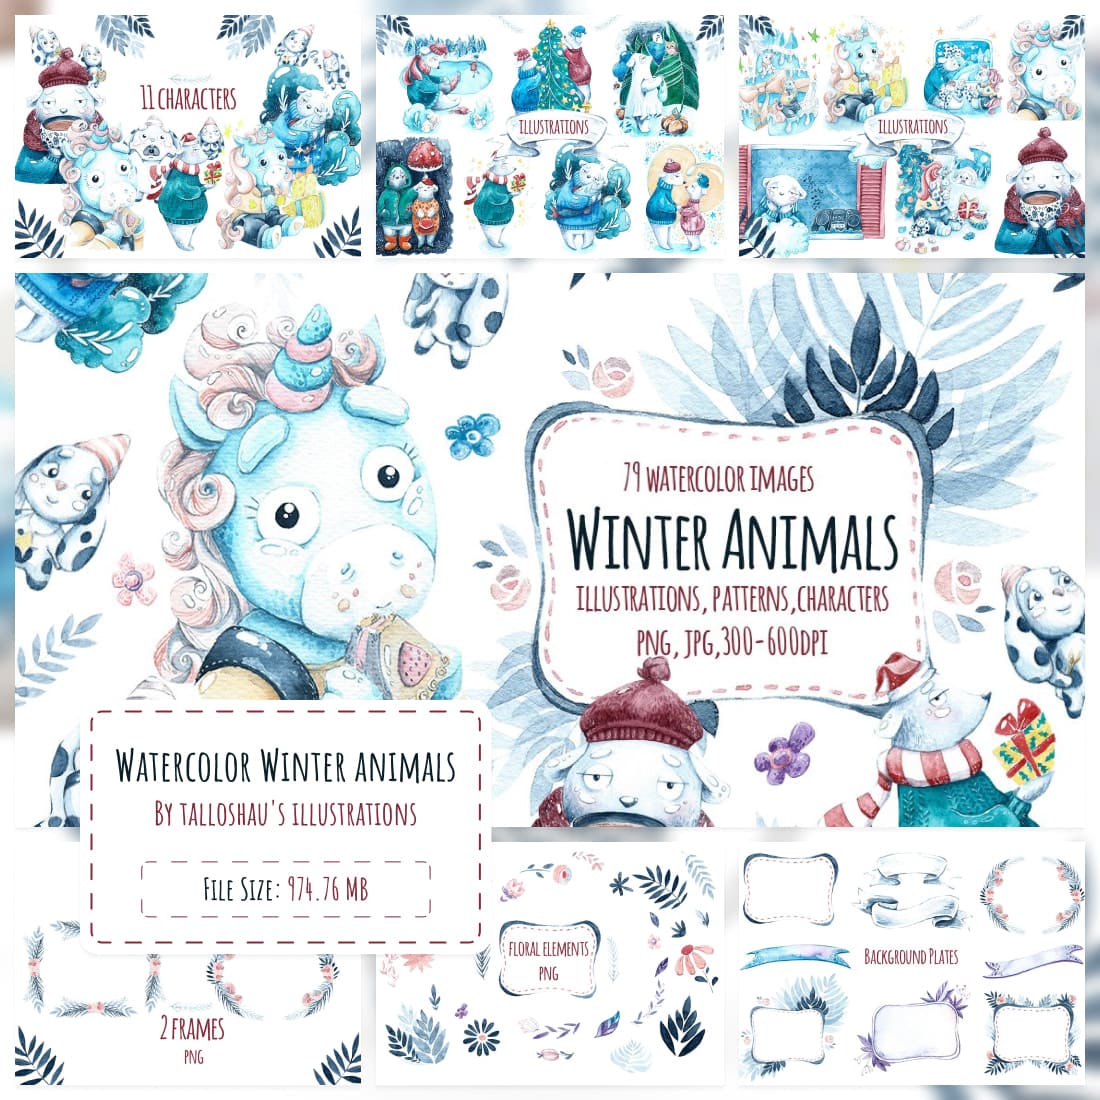 Watercolor Winter animals main cover.